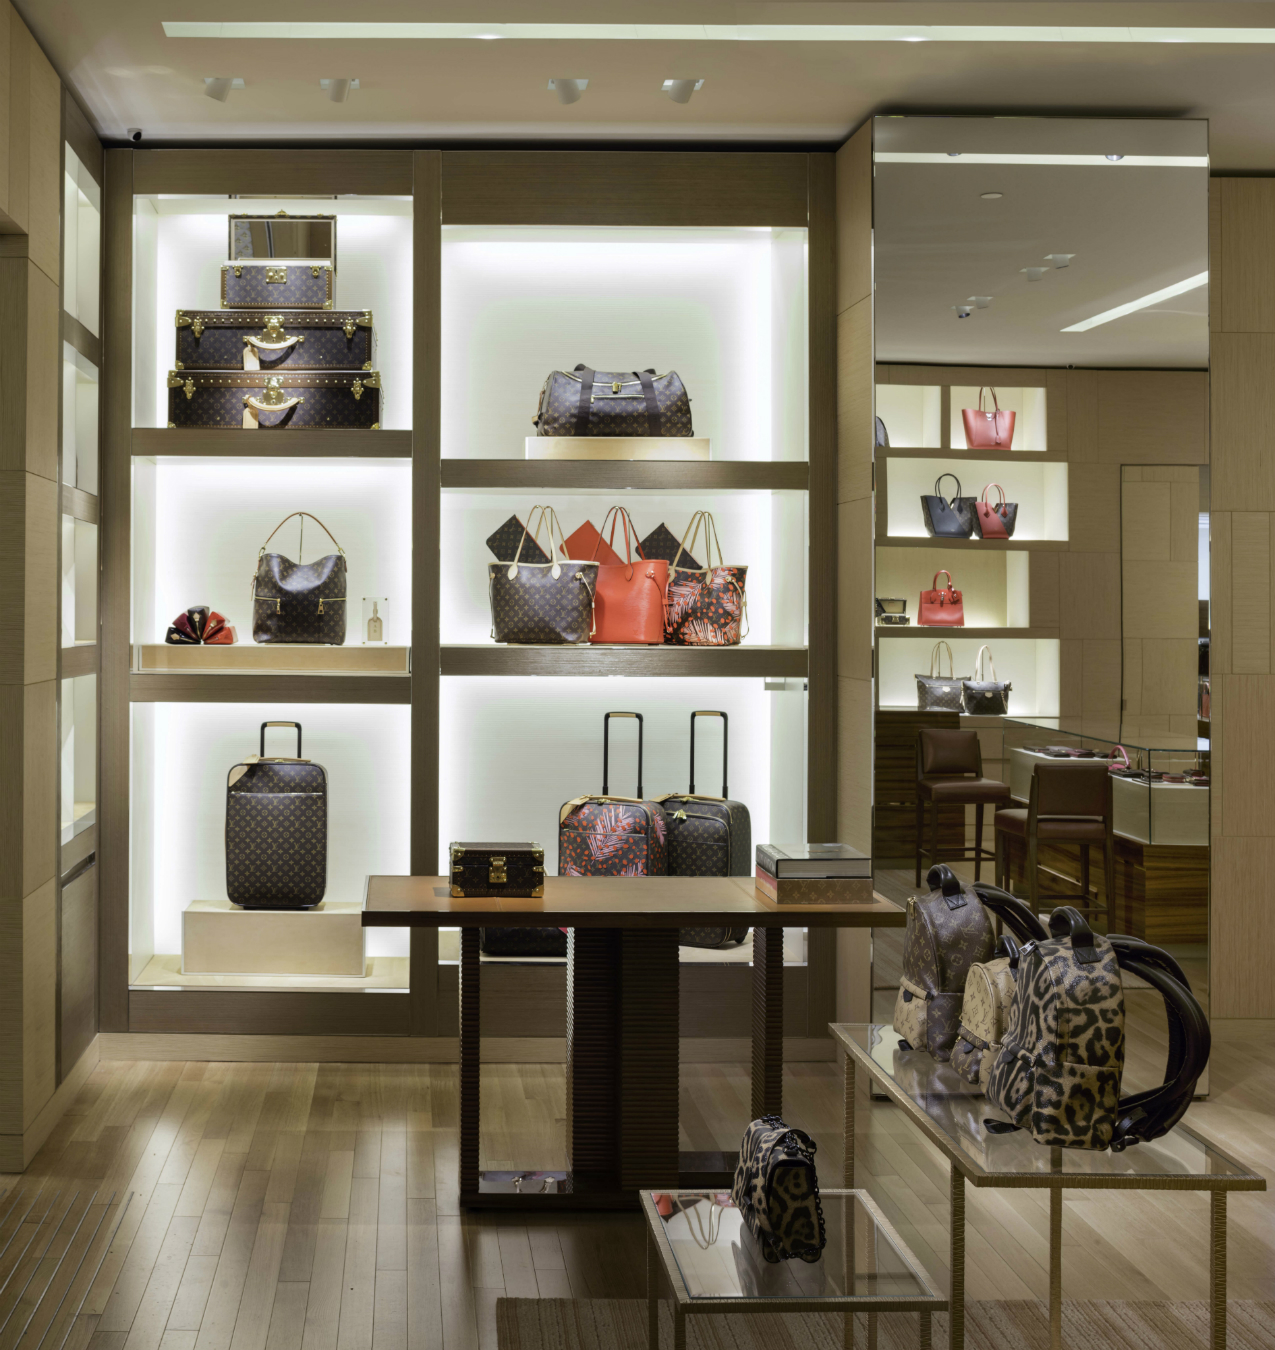 LOUIS VUITTON Totally MM Bag – Monica's Boutique & Consignment